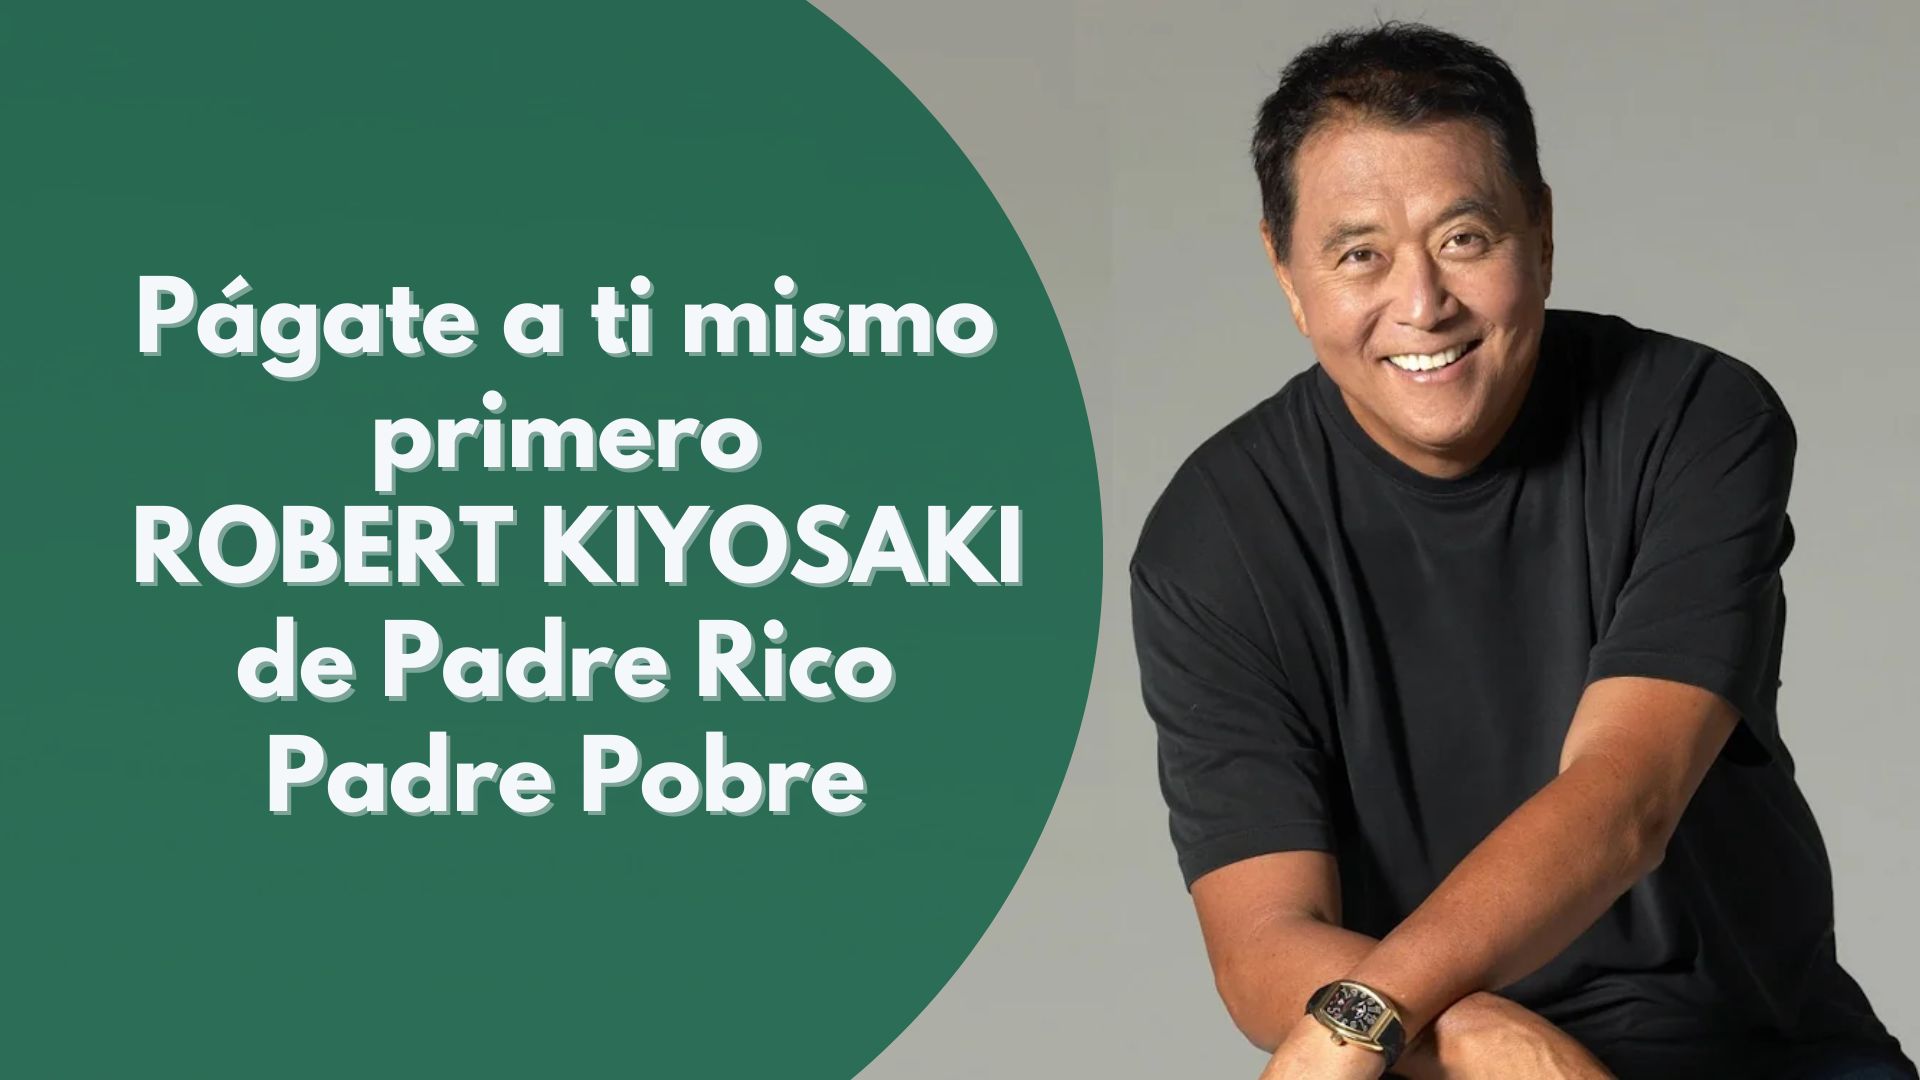 PÁGATE A TI MISMO PRIMERO POR ROBERT KIYOSAKI DE PADRE RICO PADRE POBRE